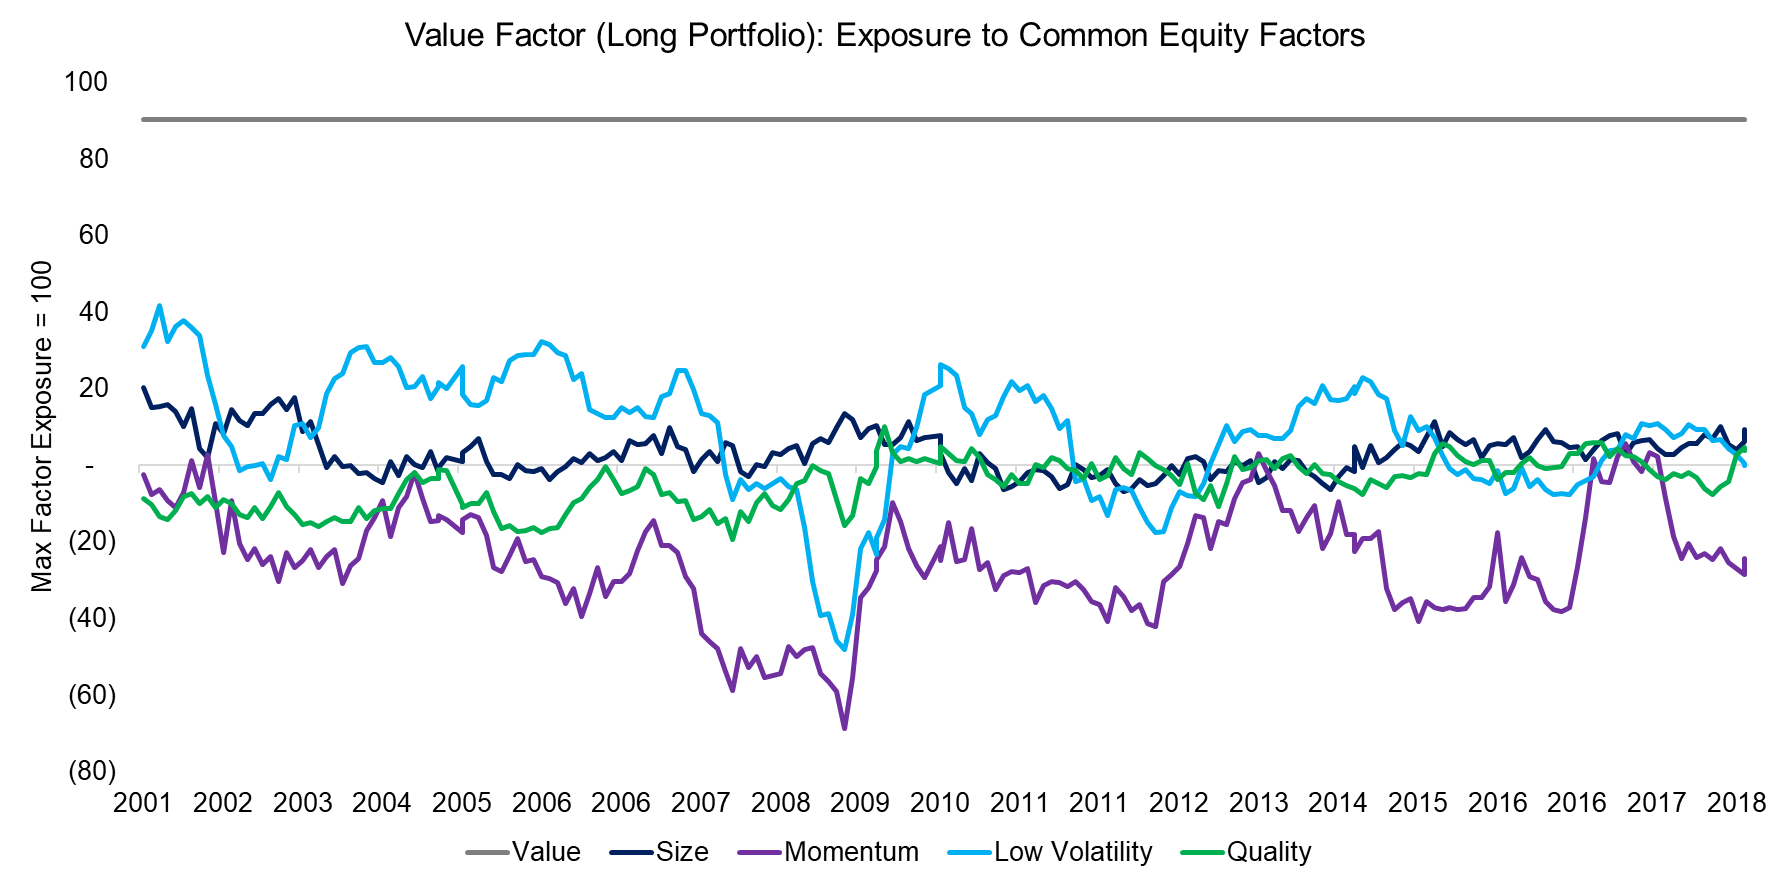 Value Factor (Long Portfolio) Exposure to Common Equity Factors